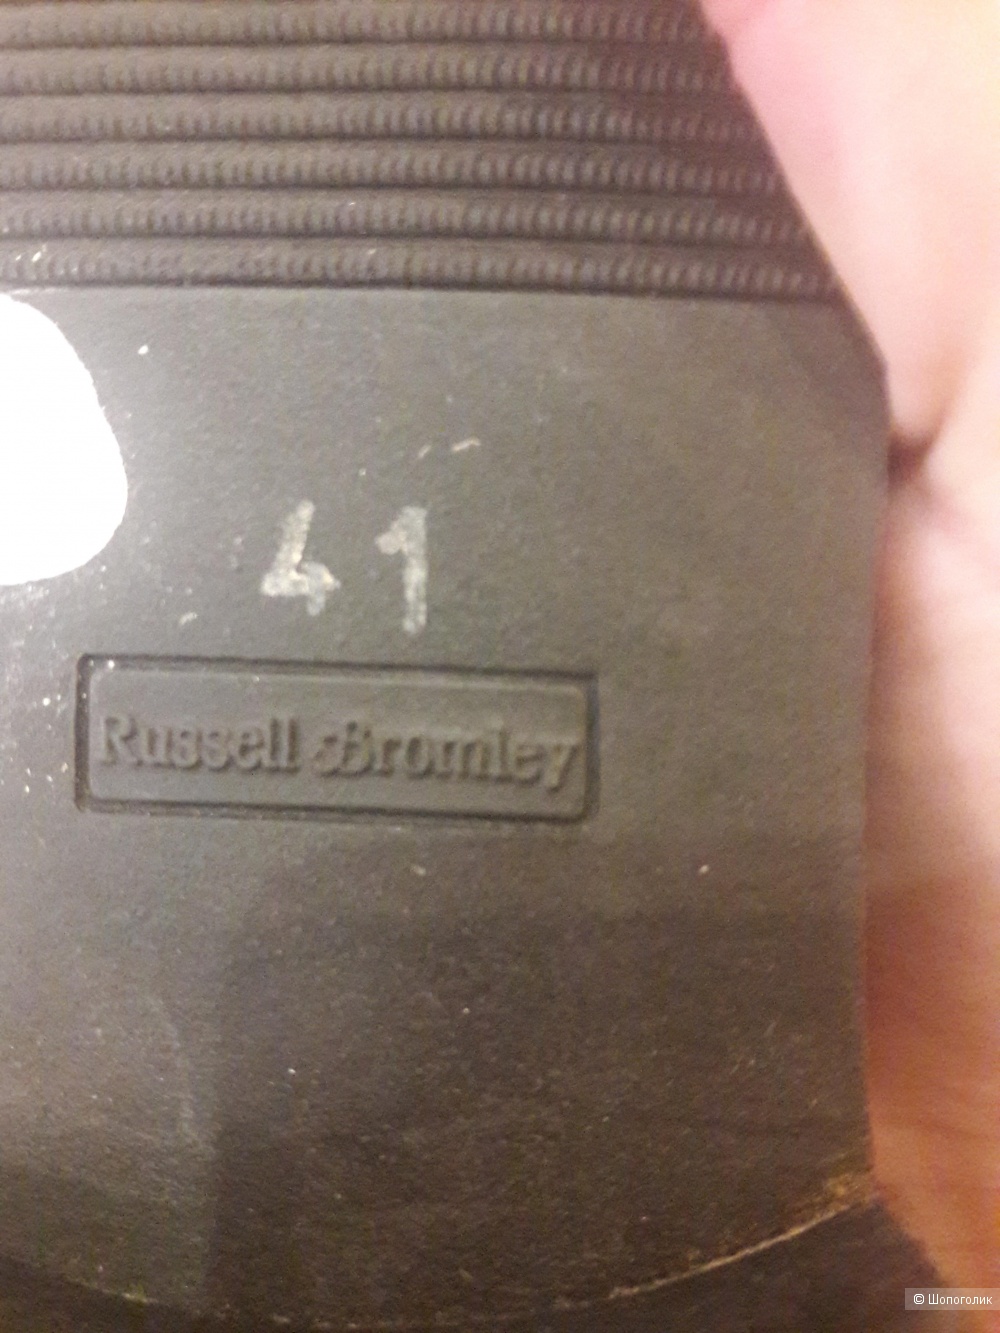 Замшевые сапоги Russel£Bromley 40-41 размера